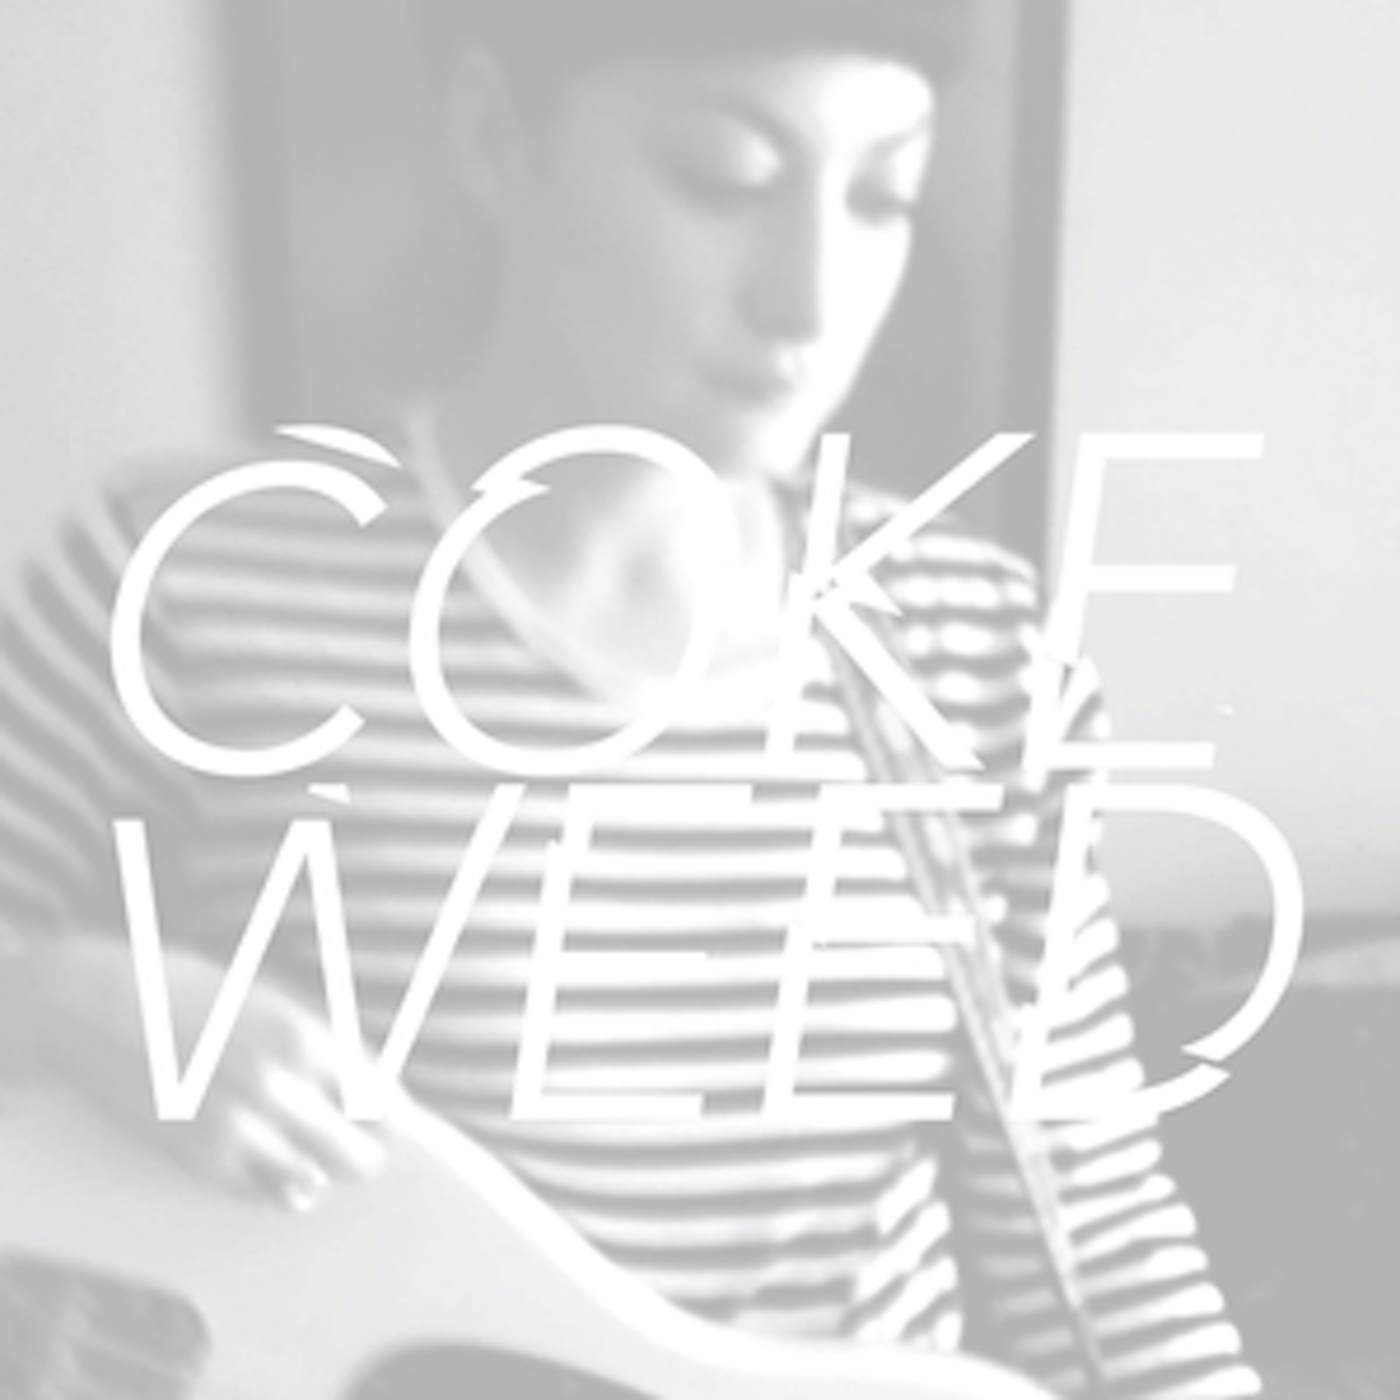 Coke Weed Mary Weaver Vinyl Record